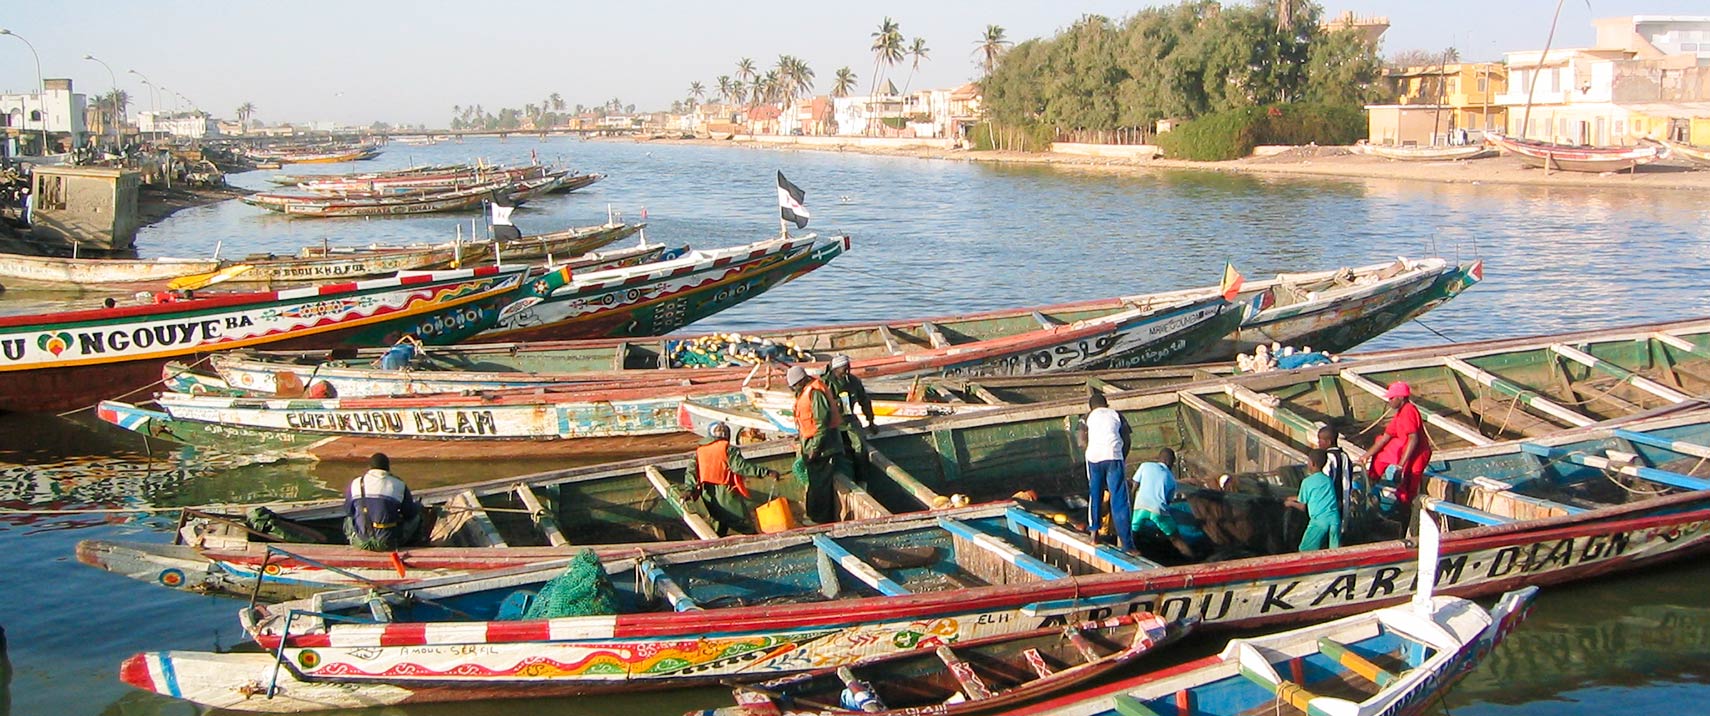 Pirogues at Saint-Louis warf, Senegal